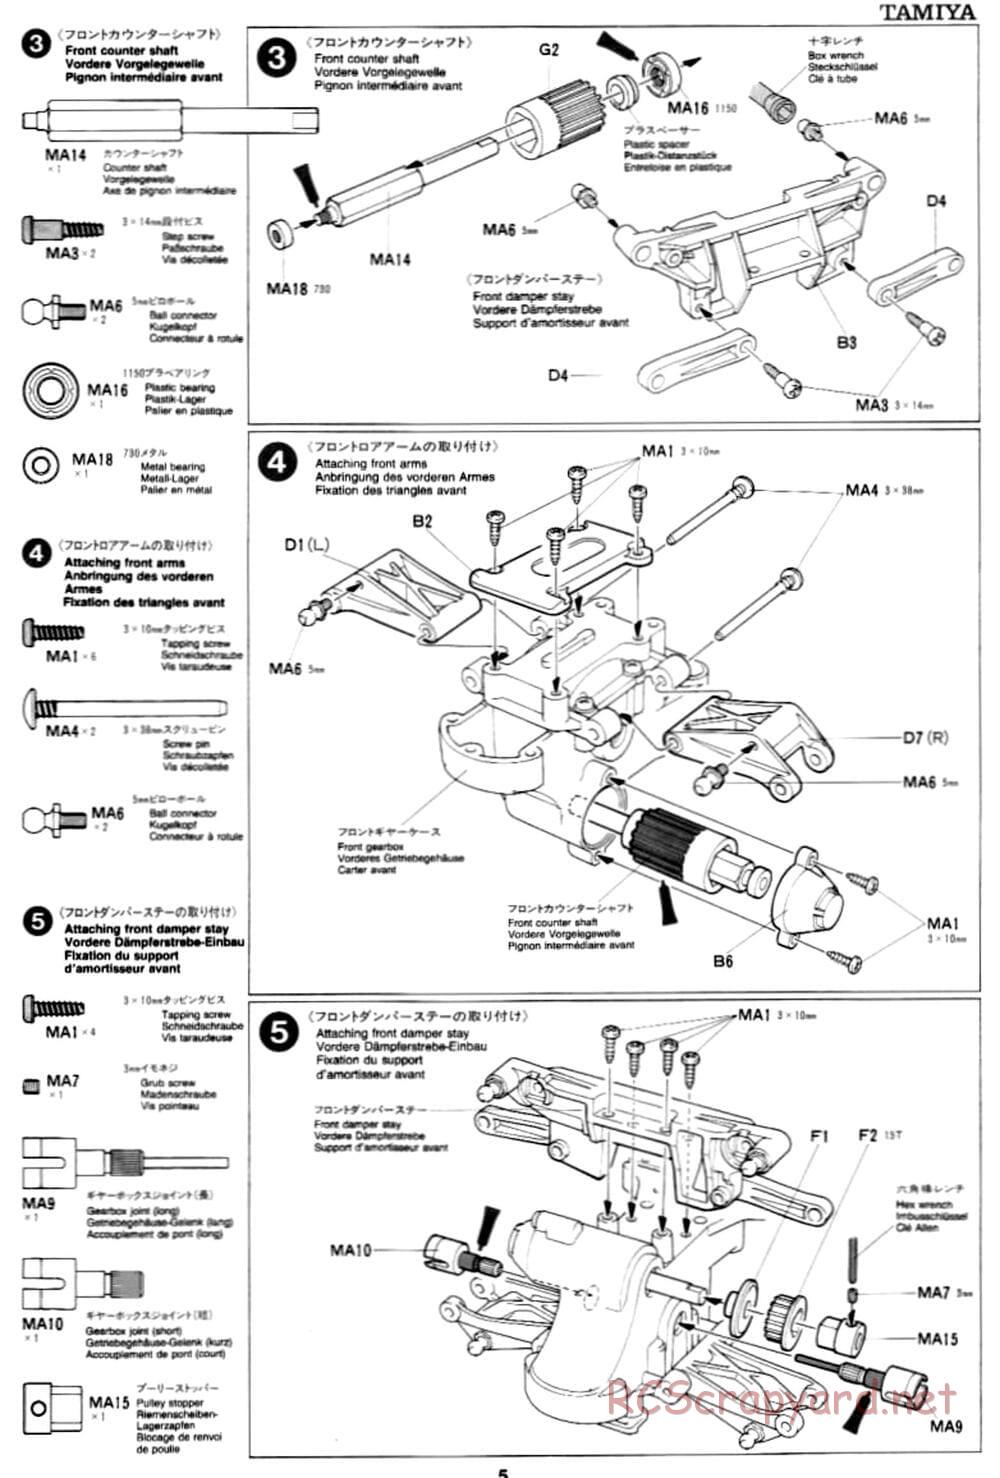 Tamiya - Mercedes CLK-GTR - TA-03R Chassis - Manual - Page 5